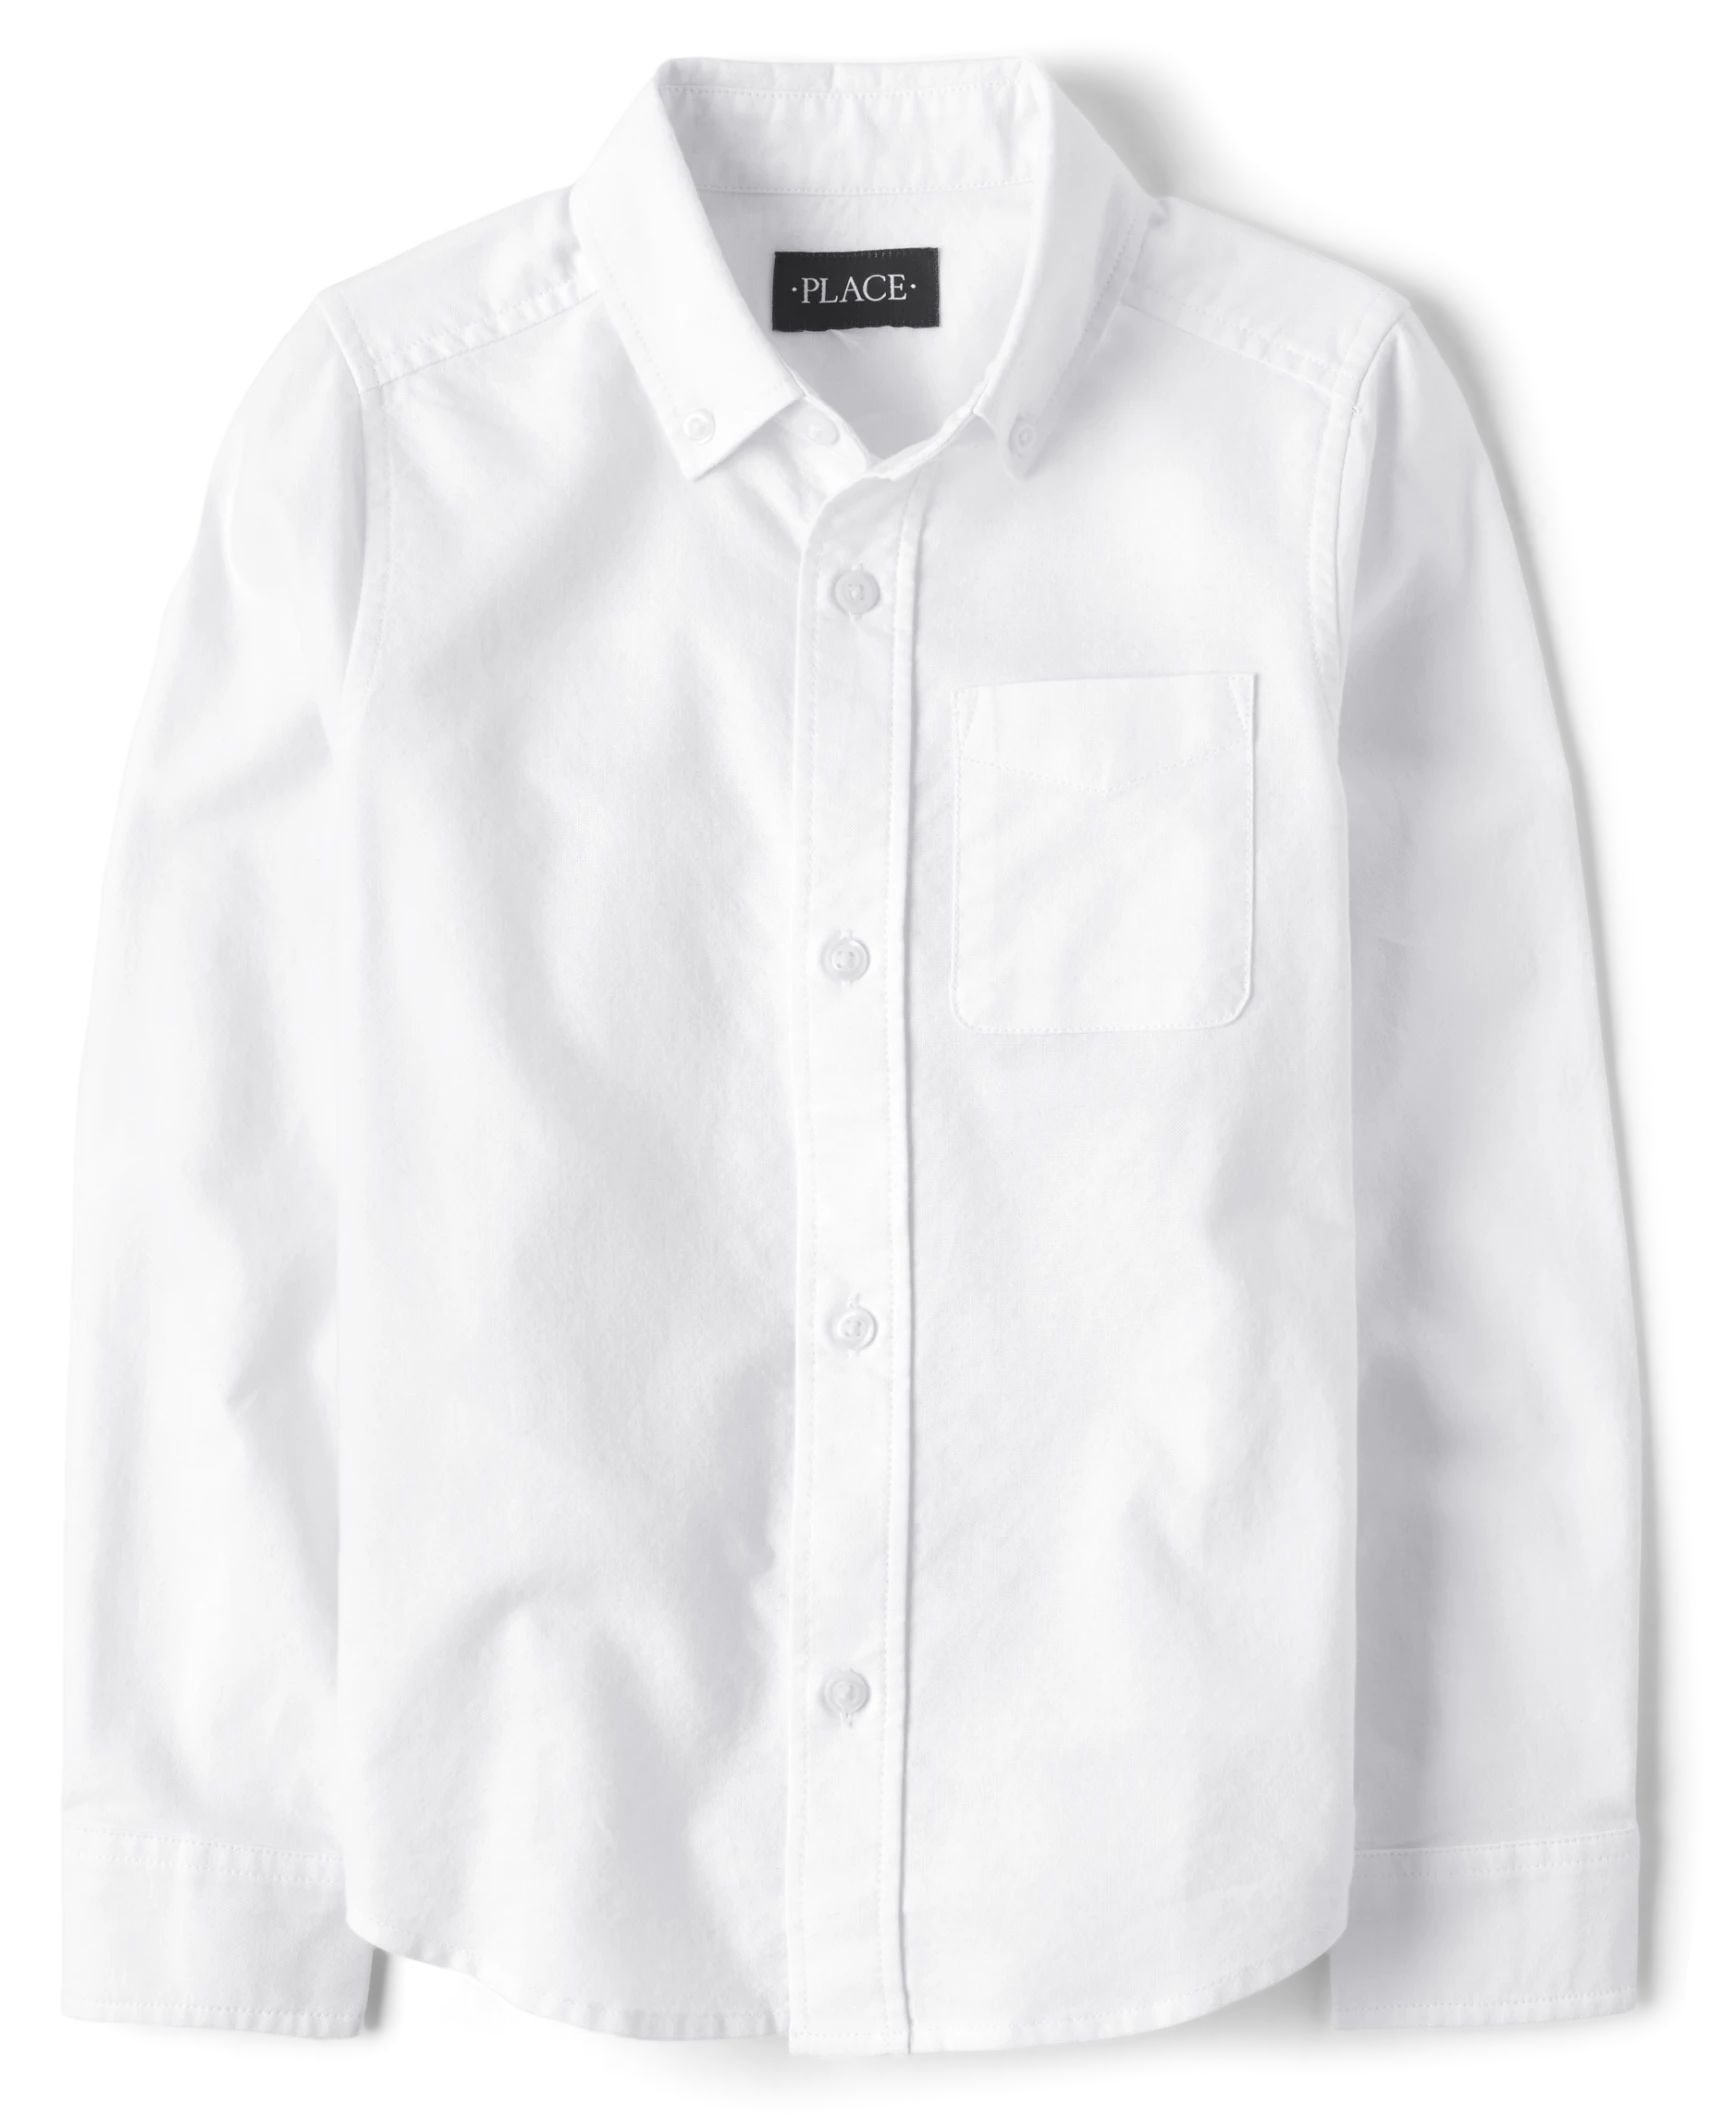 Boys Uniform Oxford Button Down Shirt - white | The Children's Place